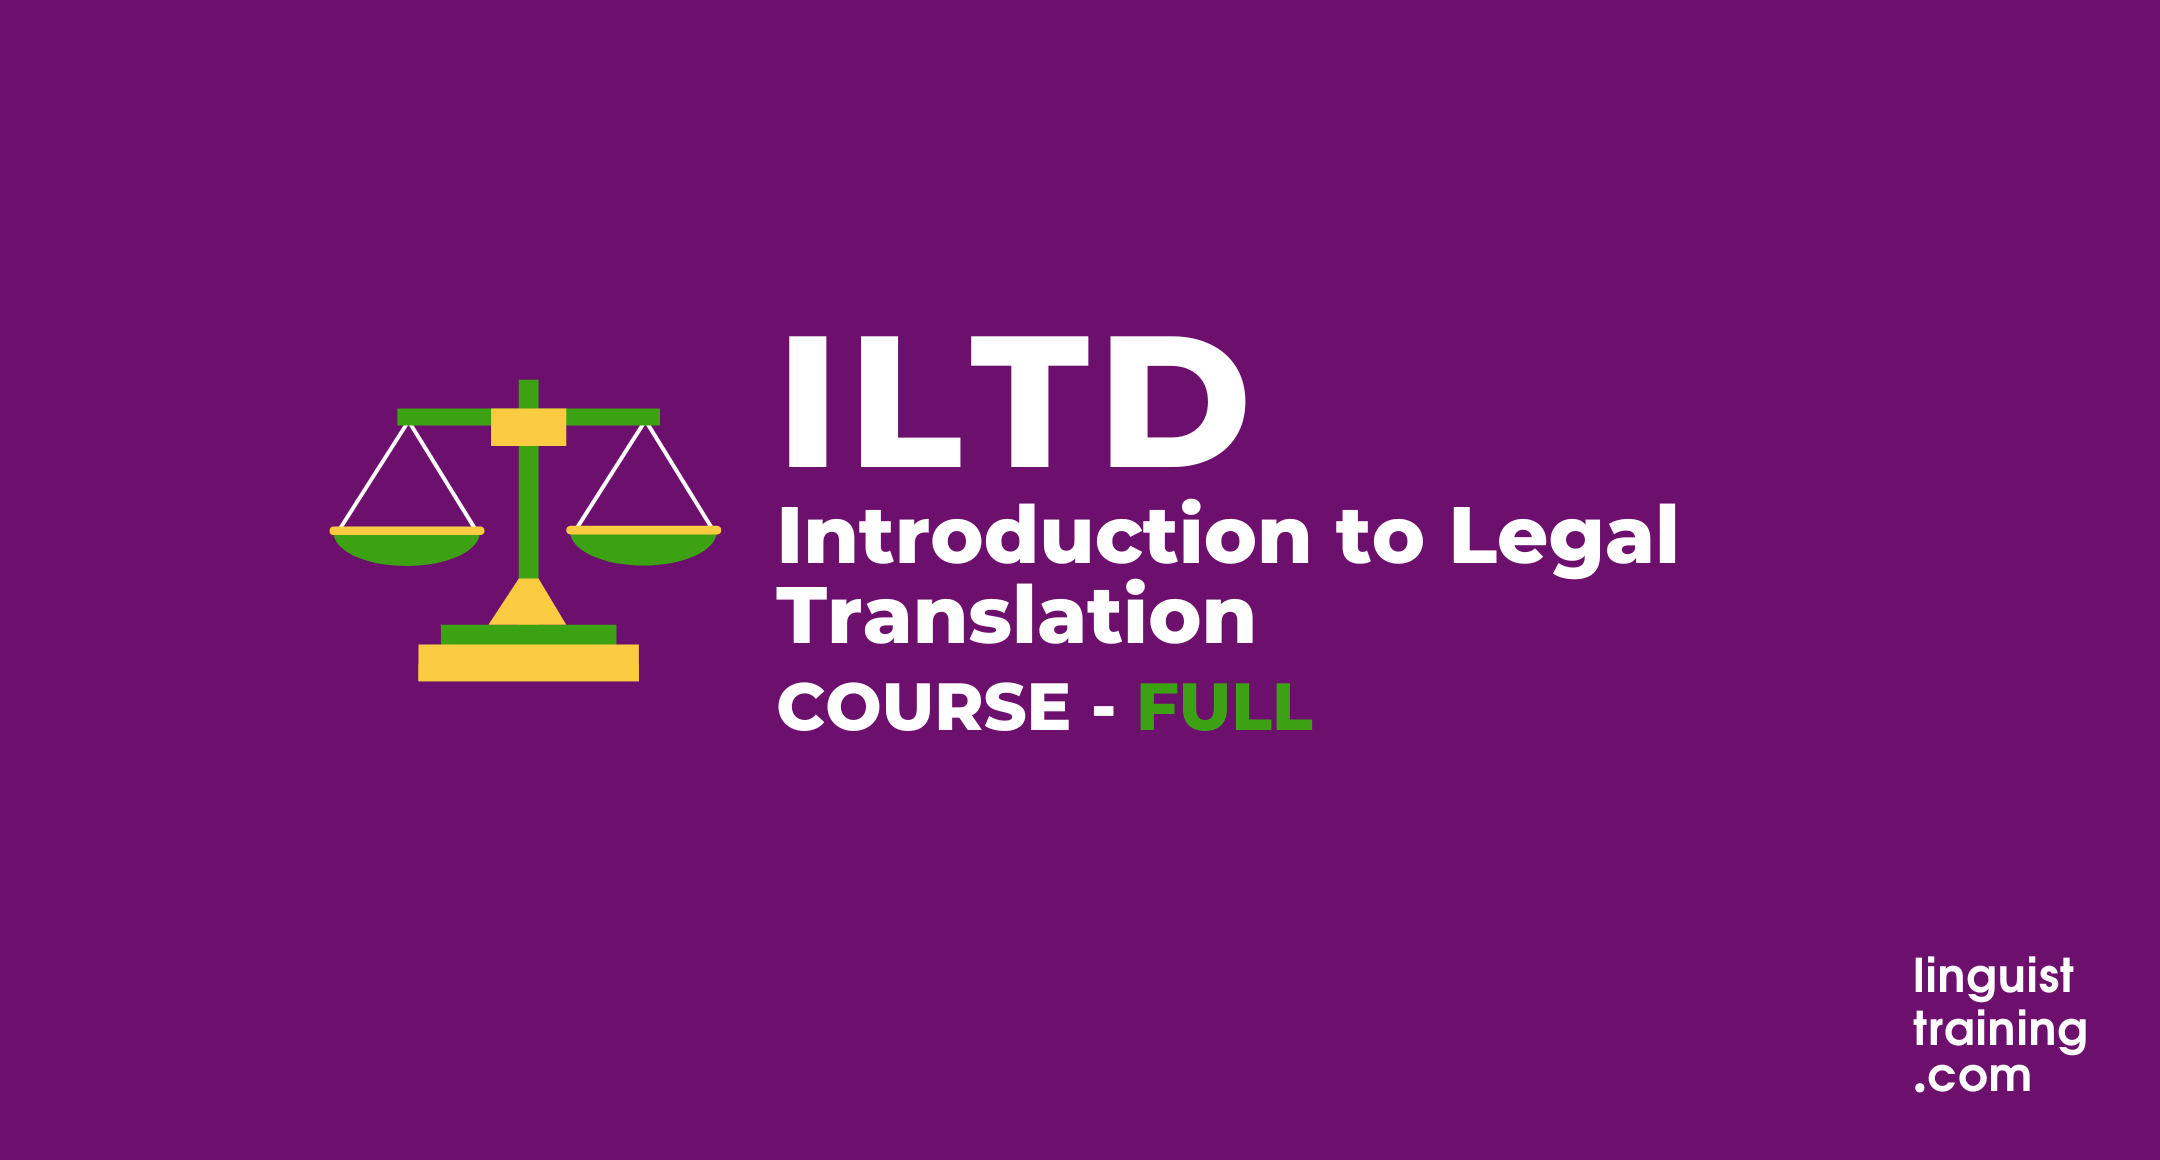 ILTD (Introduction to Legal Translation Diploma)